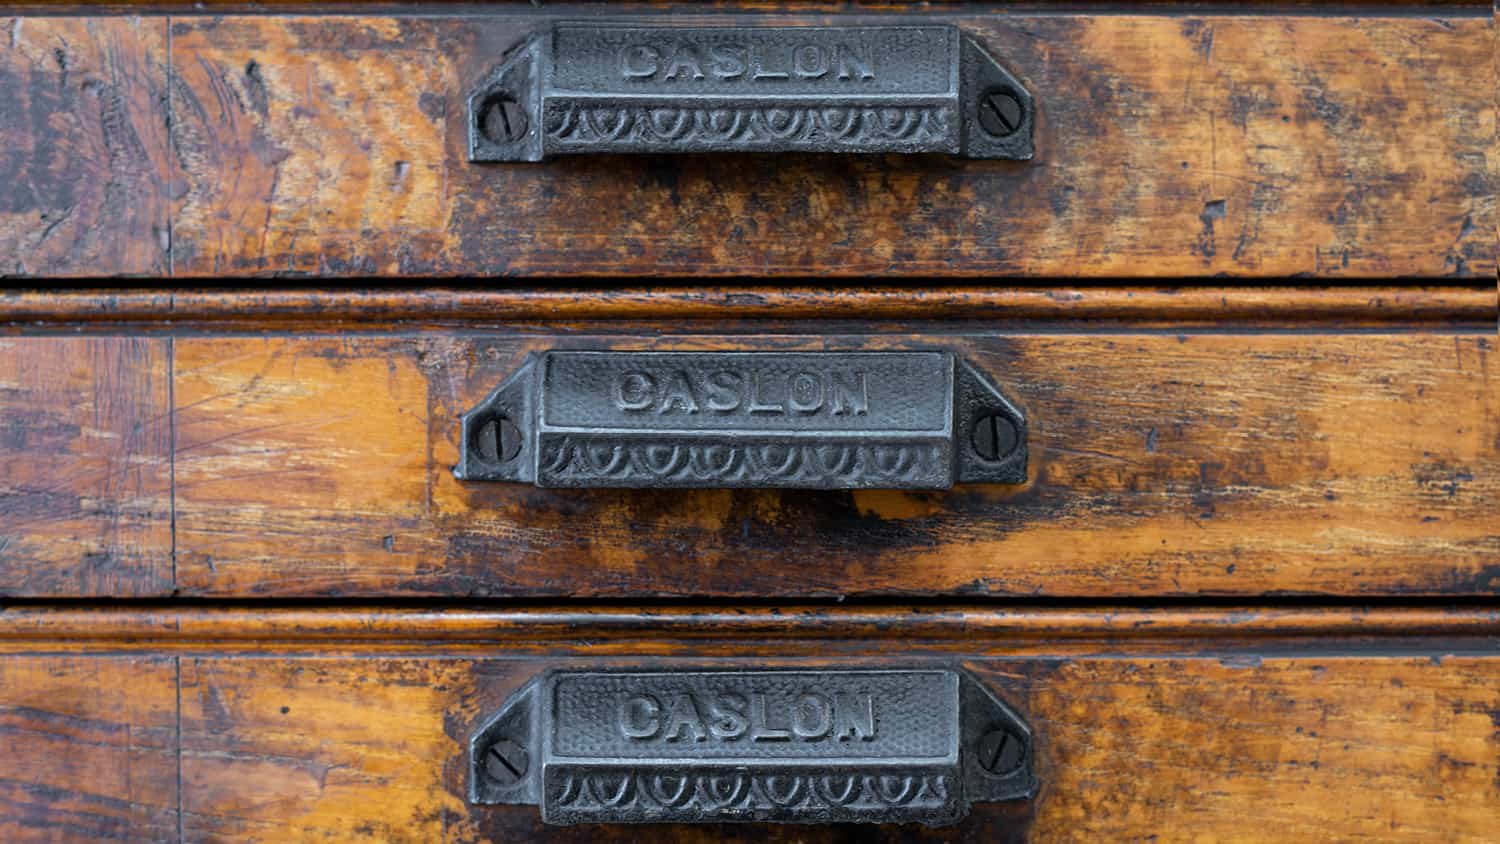  Caslon wood type cabinet 